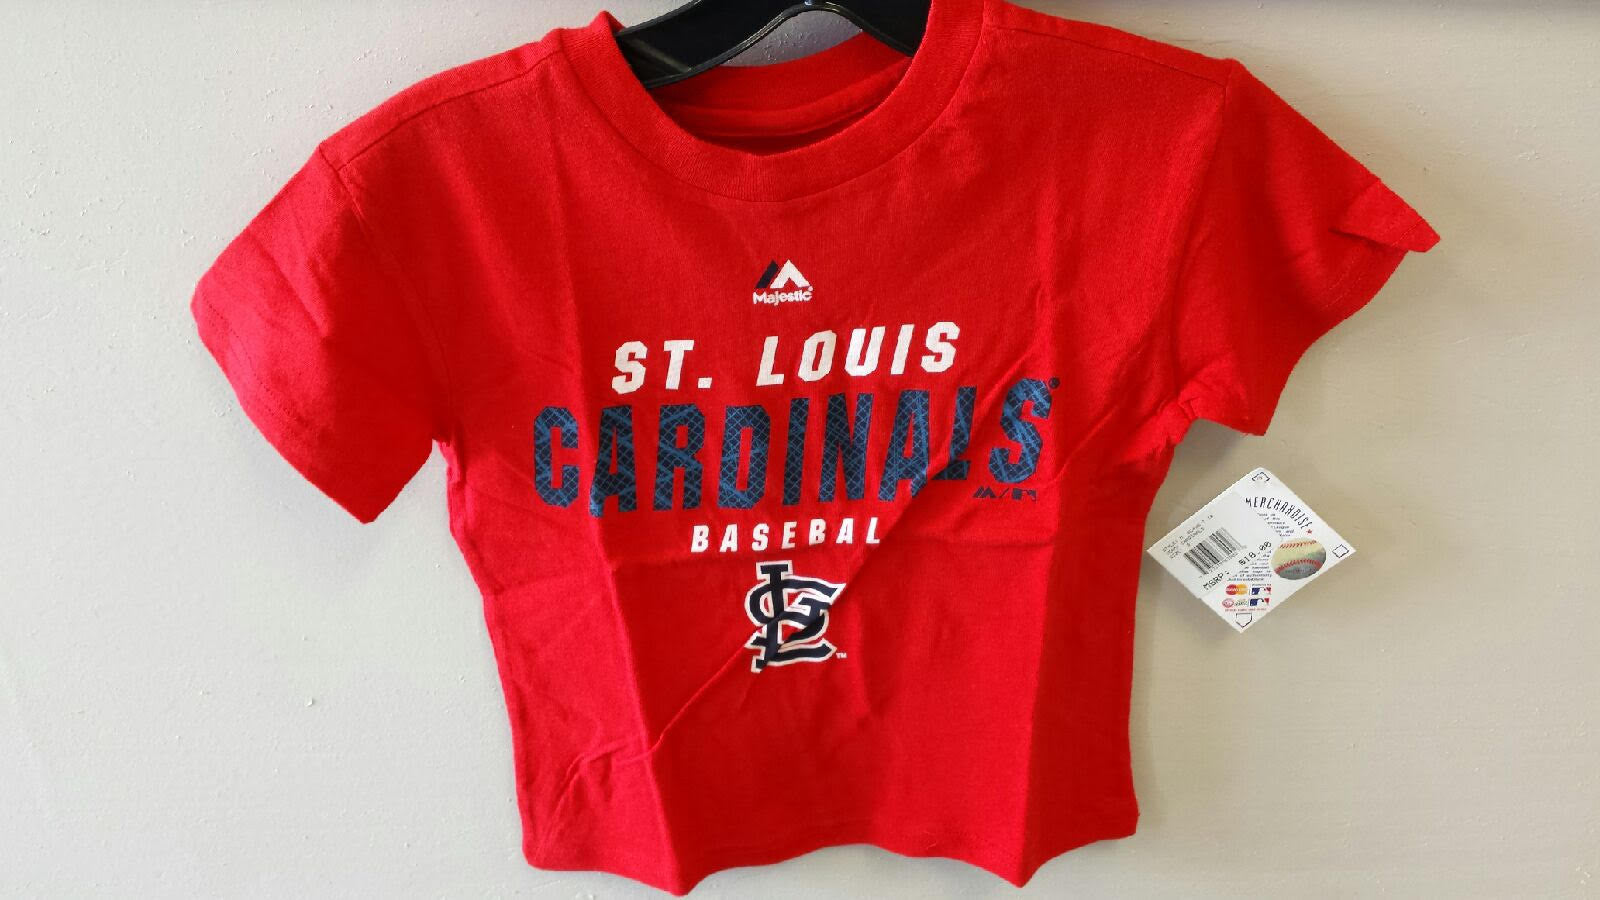 St. Louis Cardinals Boys 4-7 T-Shirt by Majestic